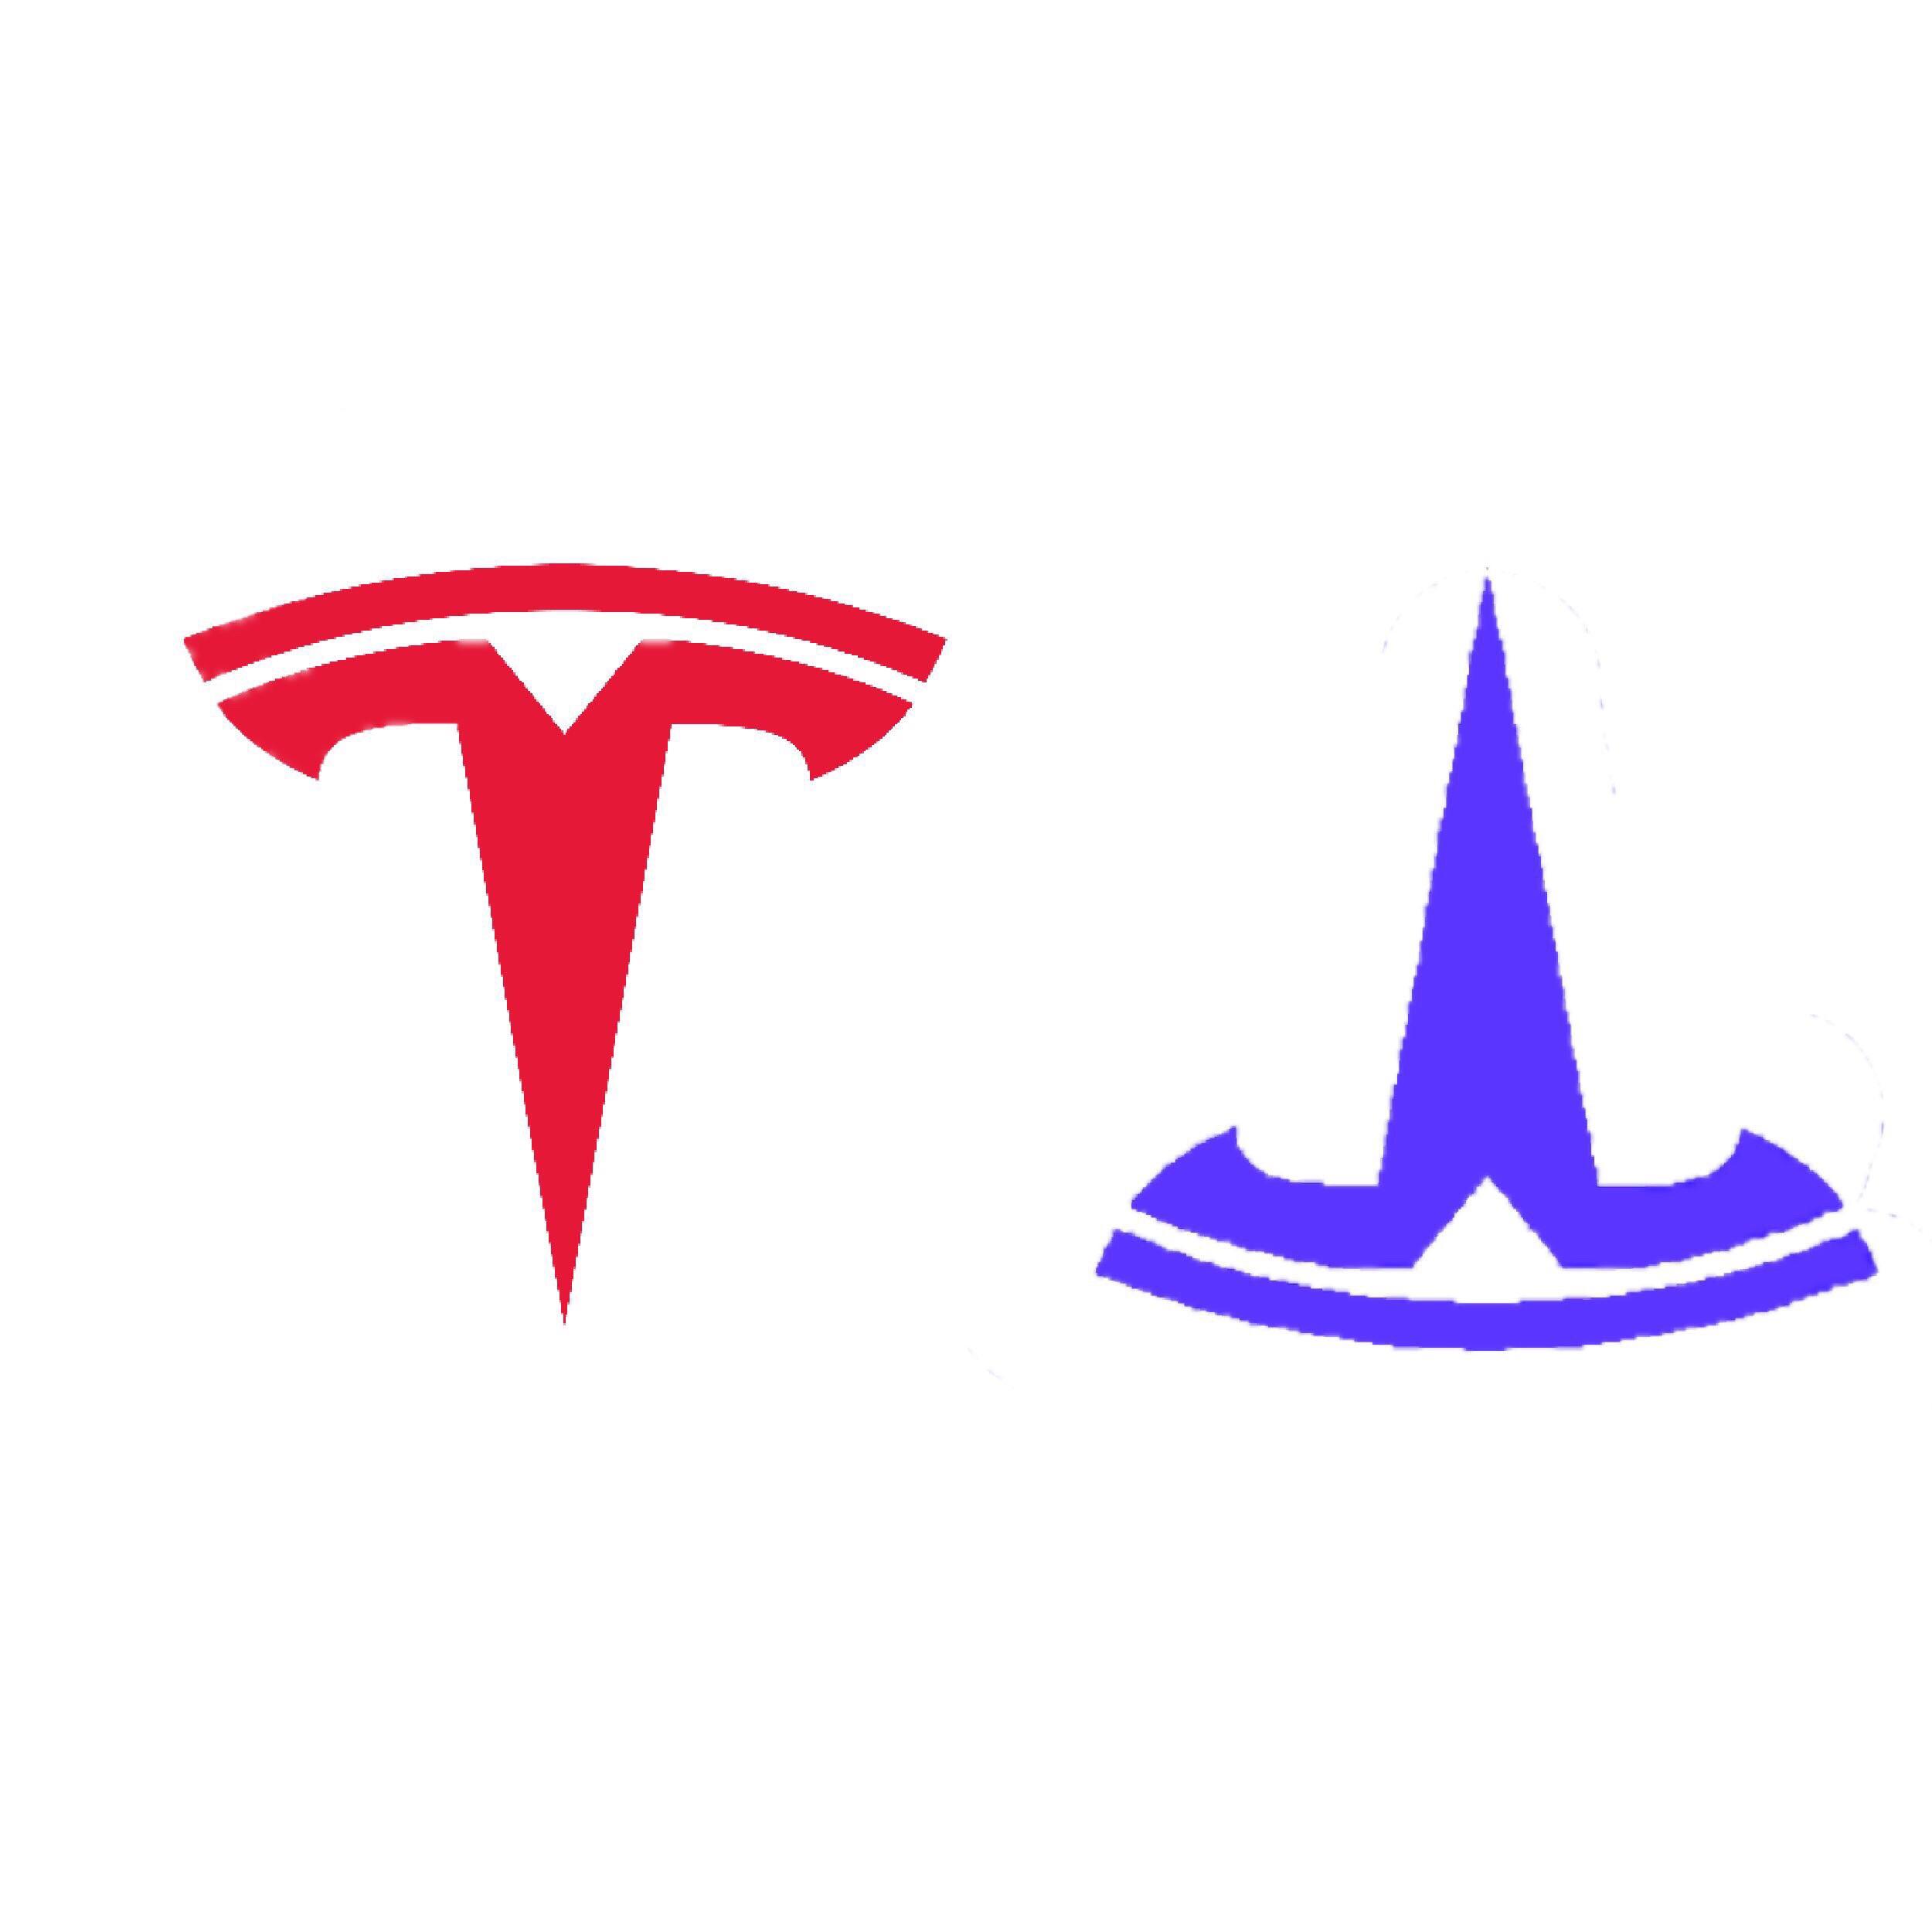 Blue Tesla Logo - BabsBabyFace (u/BabsBabyFace) - Reddit